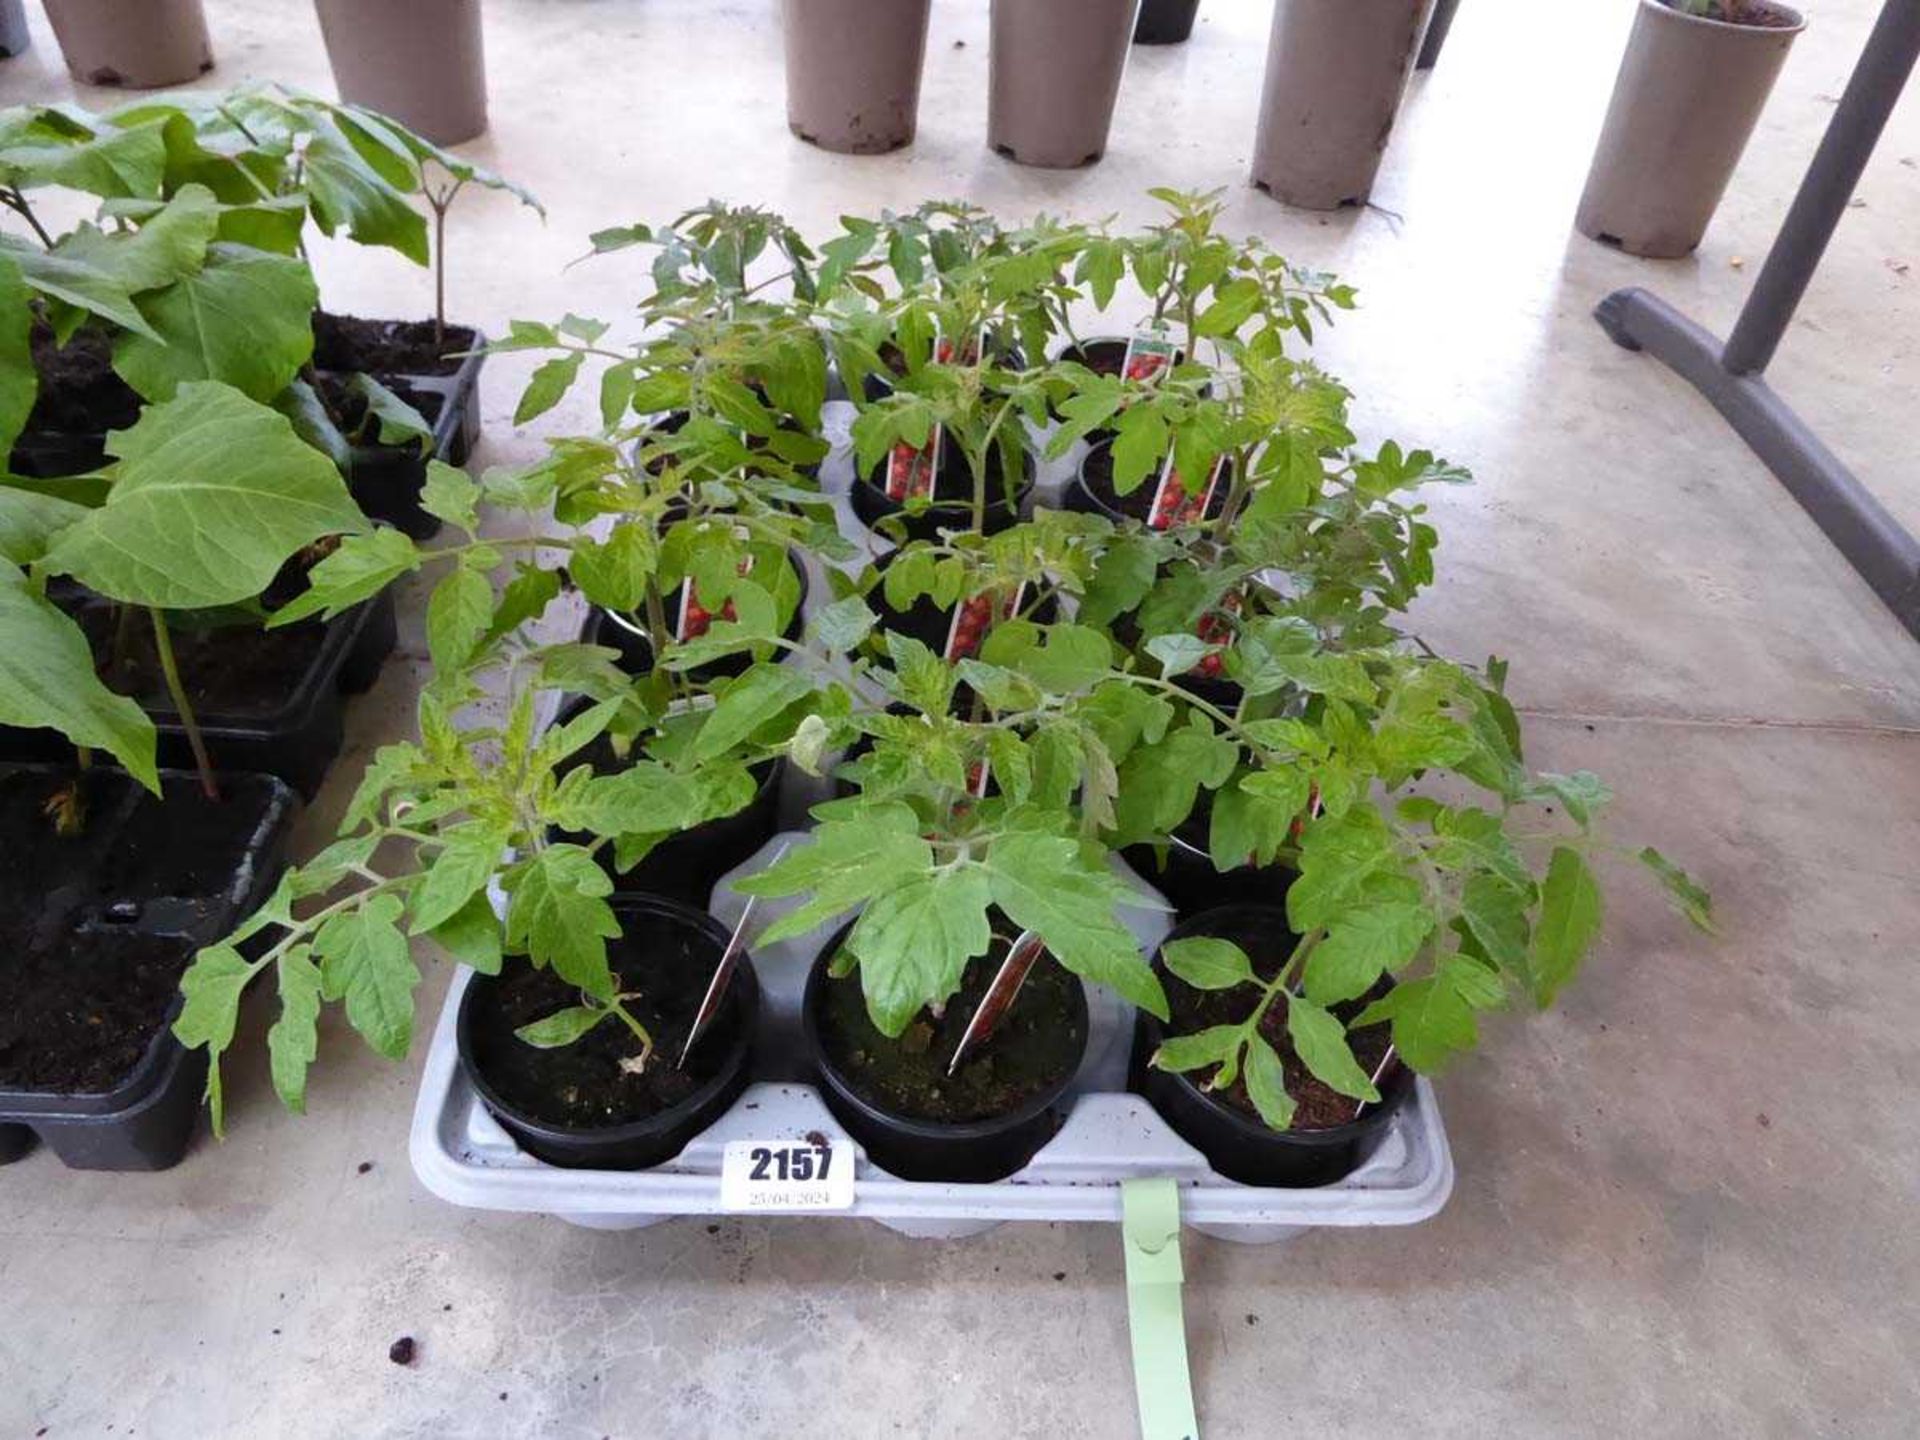 Tray containing 14 pots of Garden Delight tomato plants